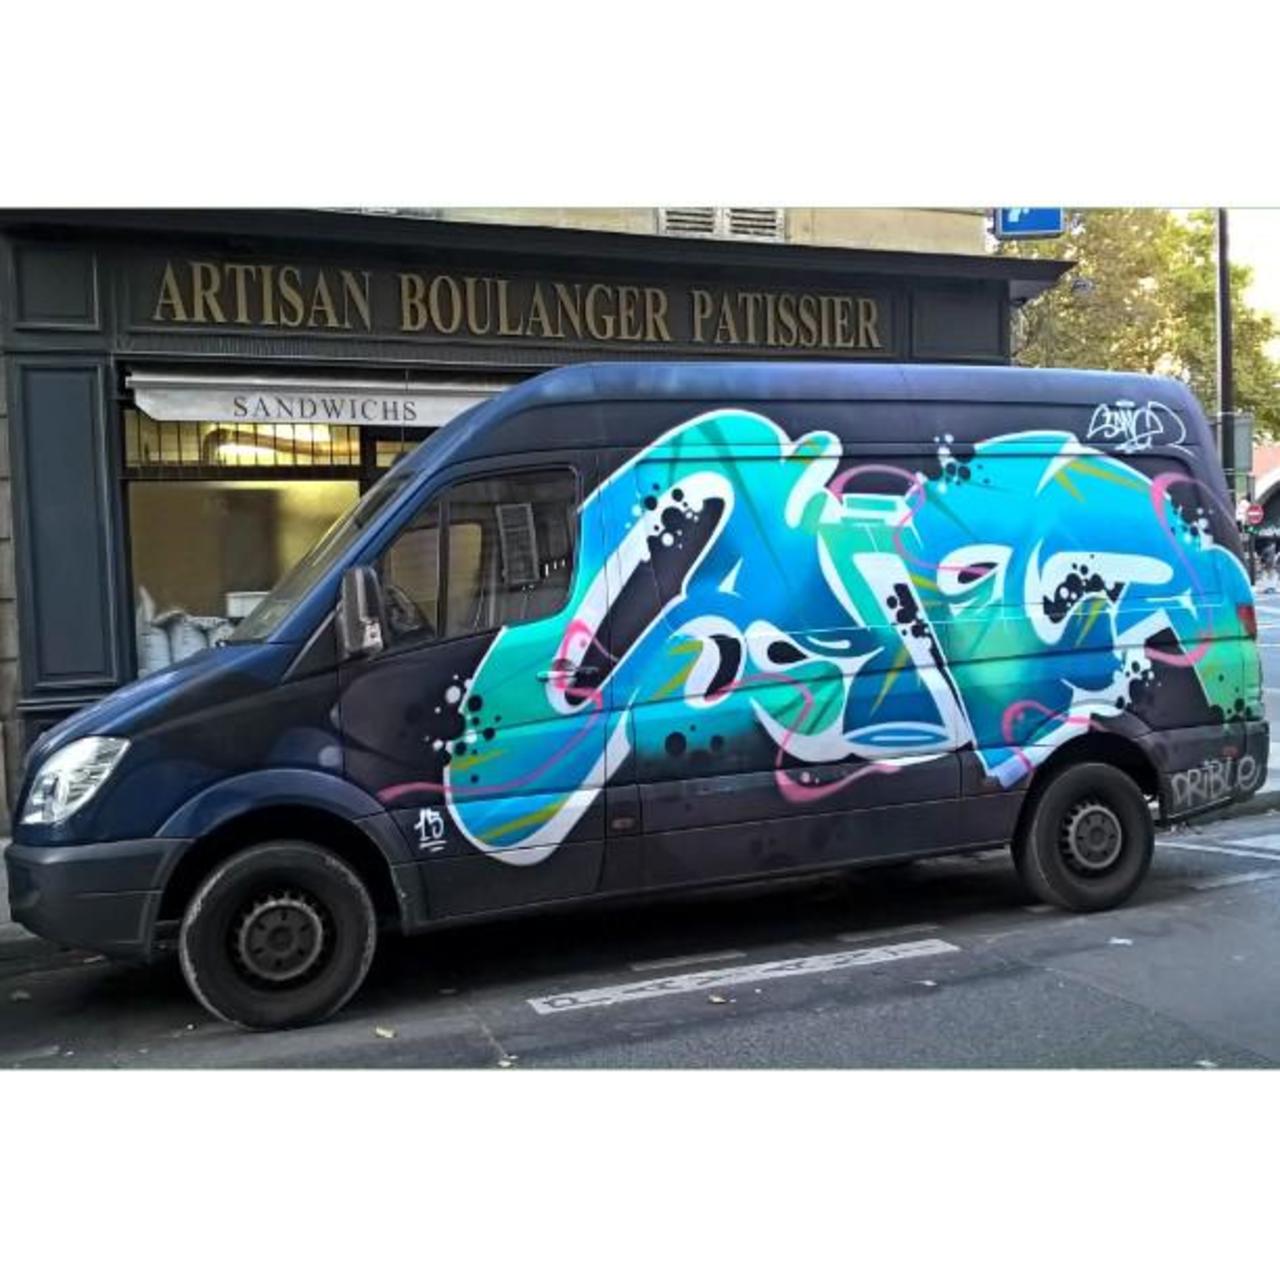 #Paris #graffiti photo by @maxdimontemarciano http://ift.tt/1MjJtMm #StreetArt http://t.co/darDkT148K